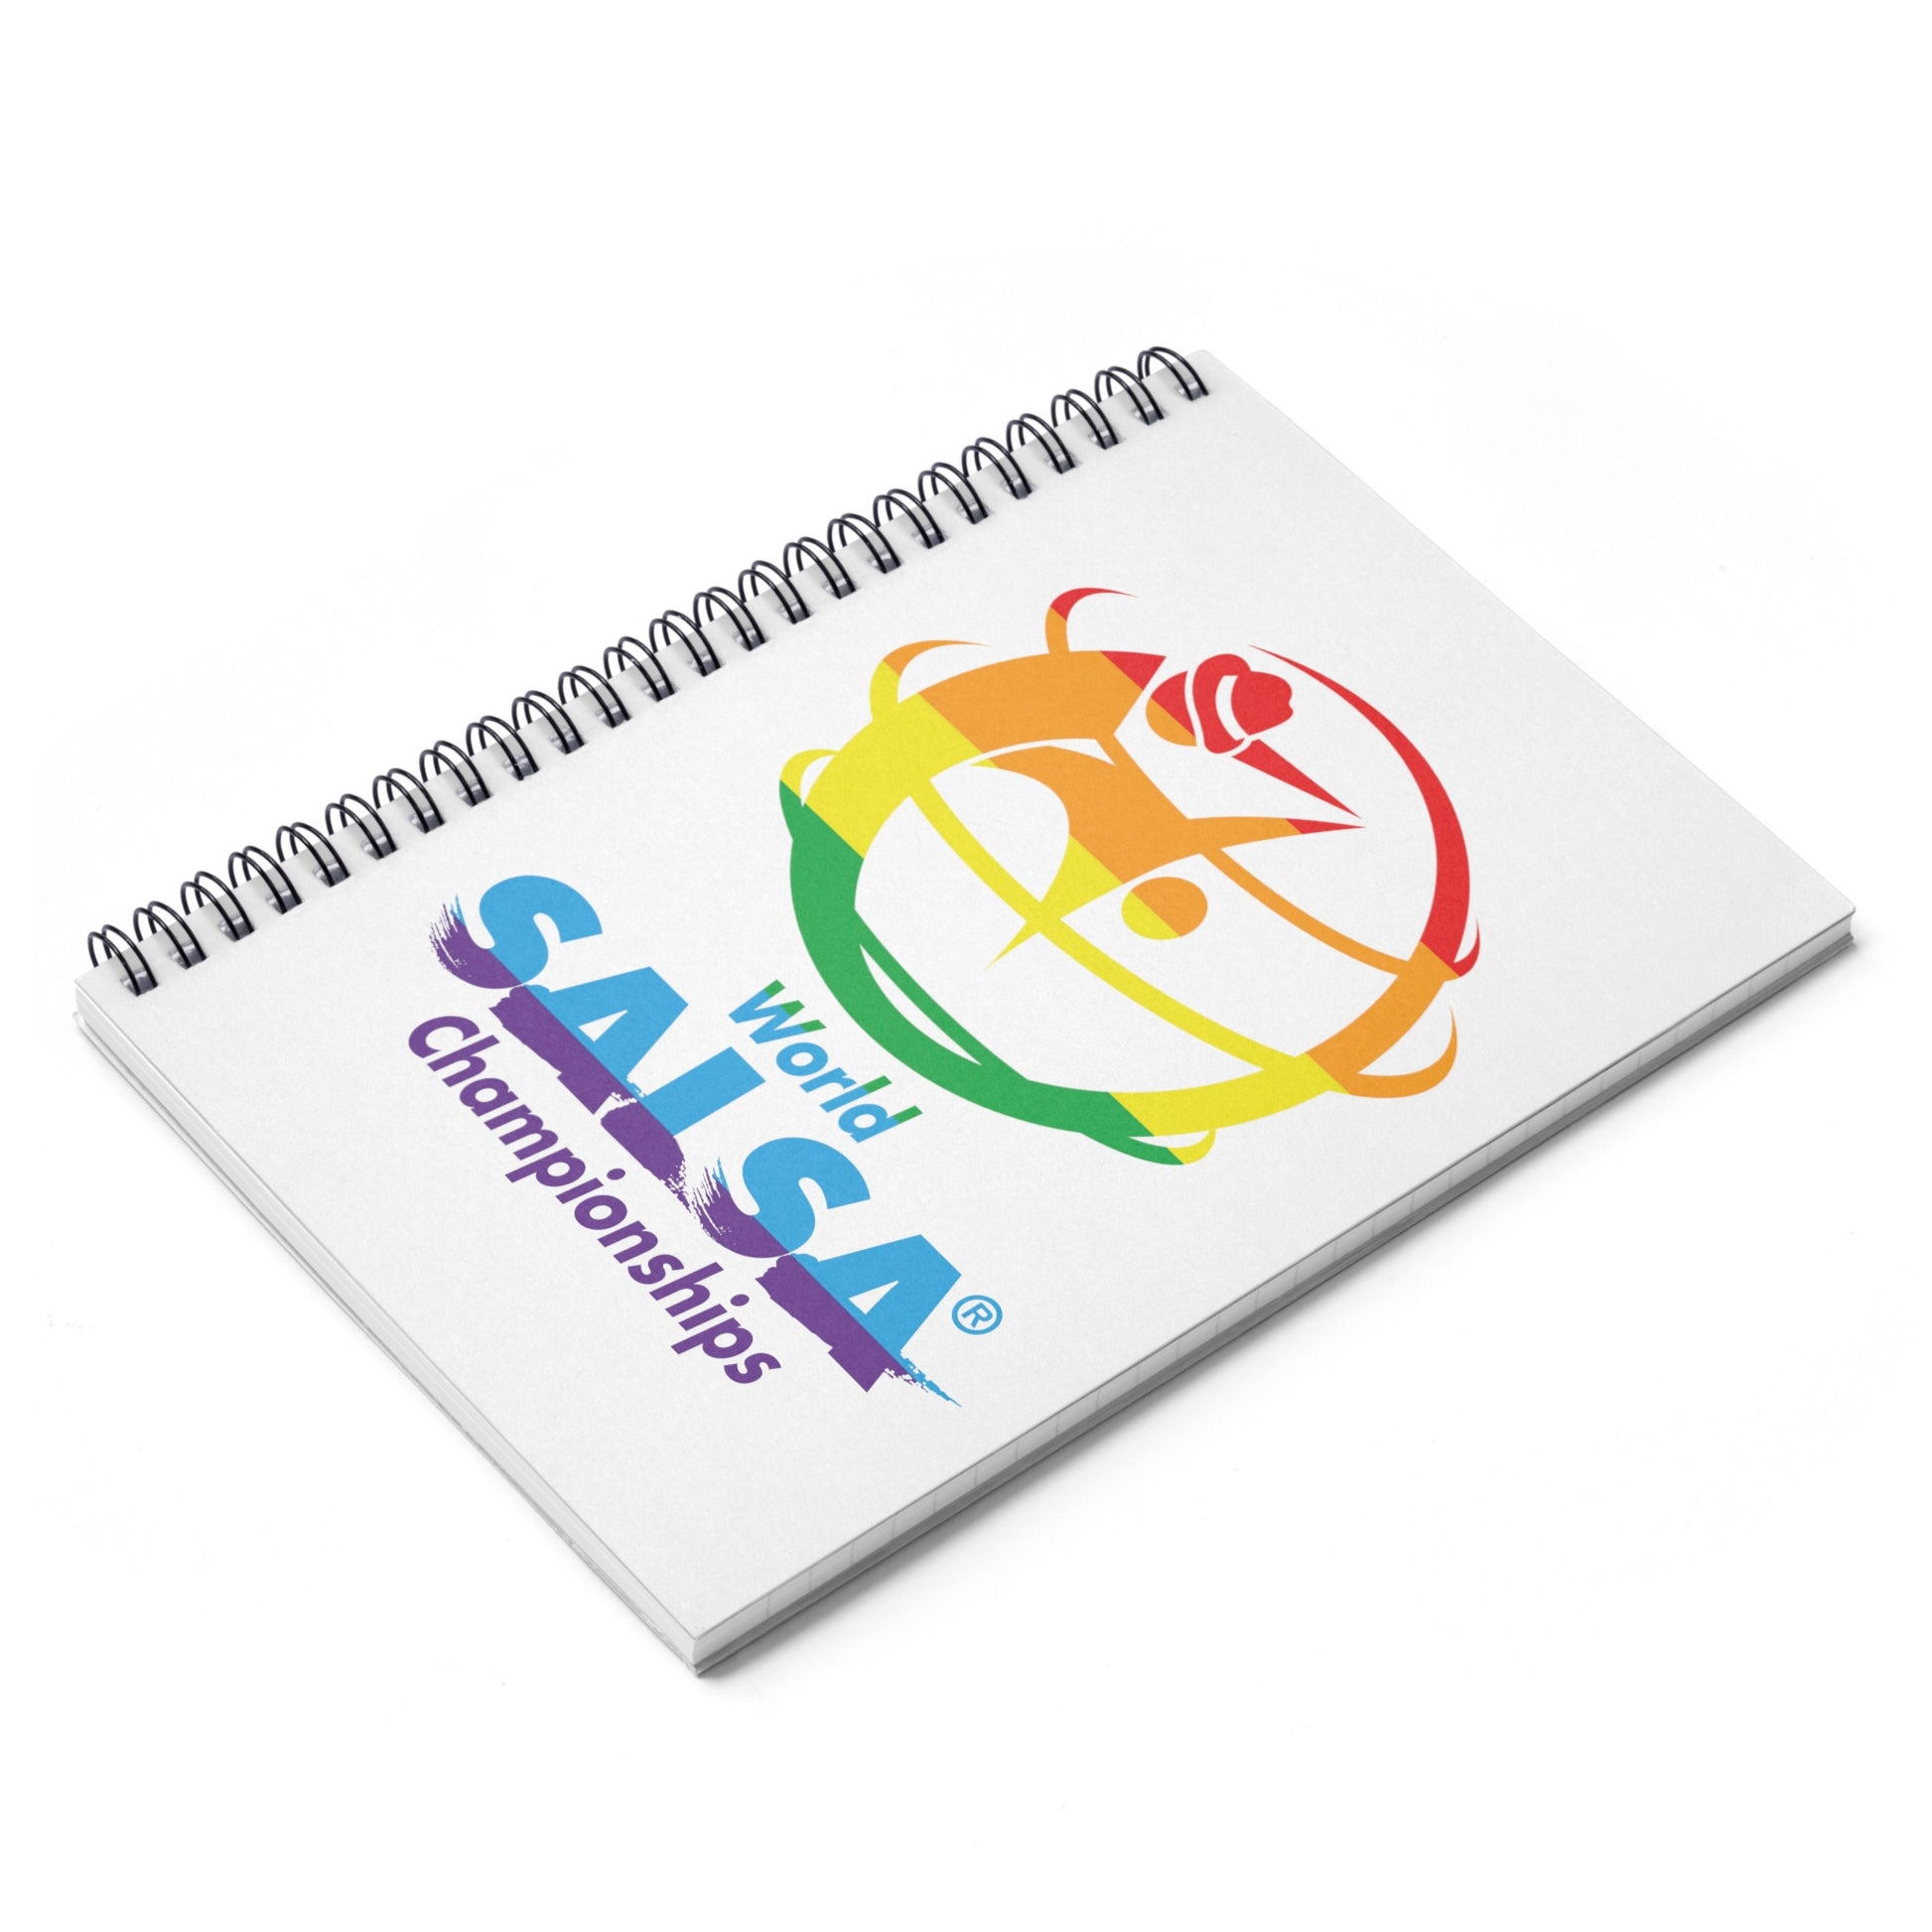 Spiral Notebook - Ruled Line - World Salsa Championships